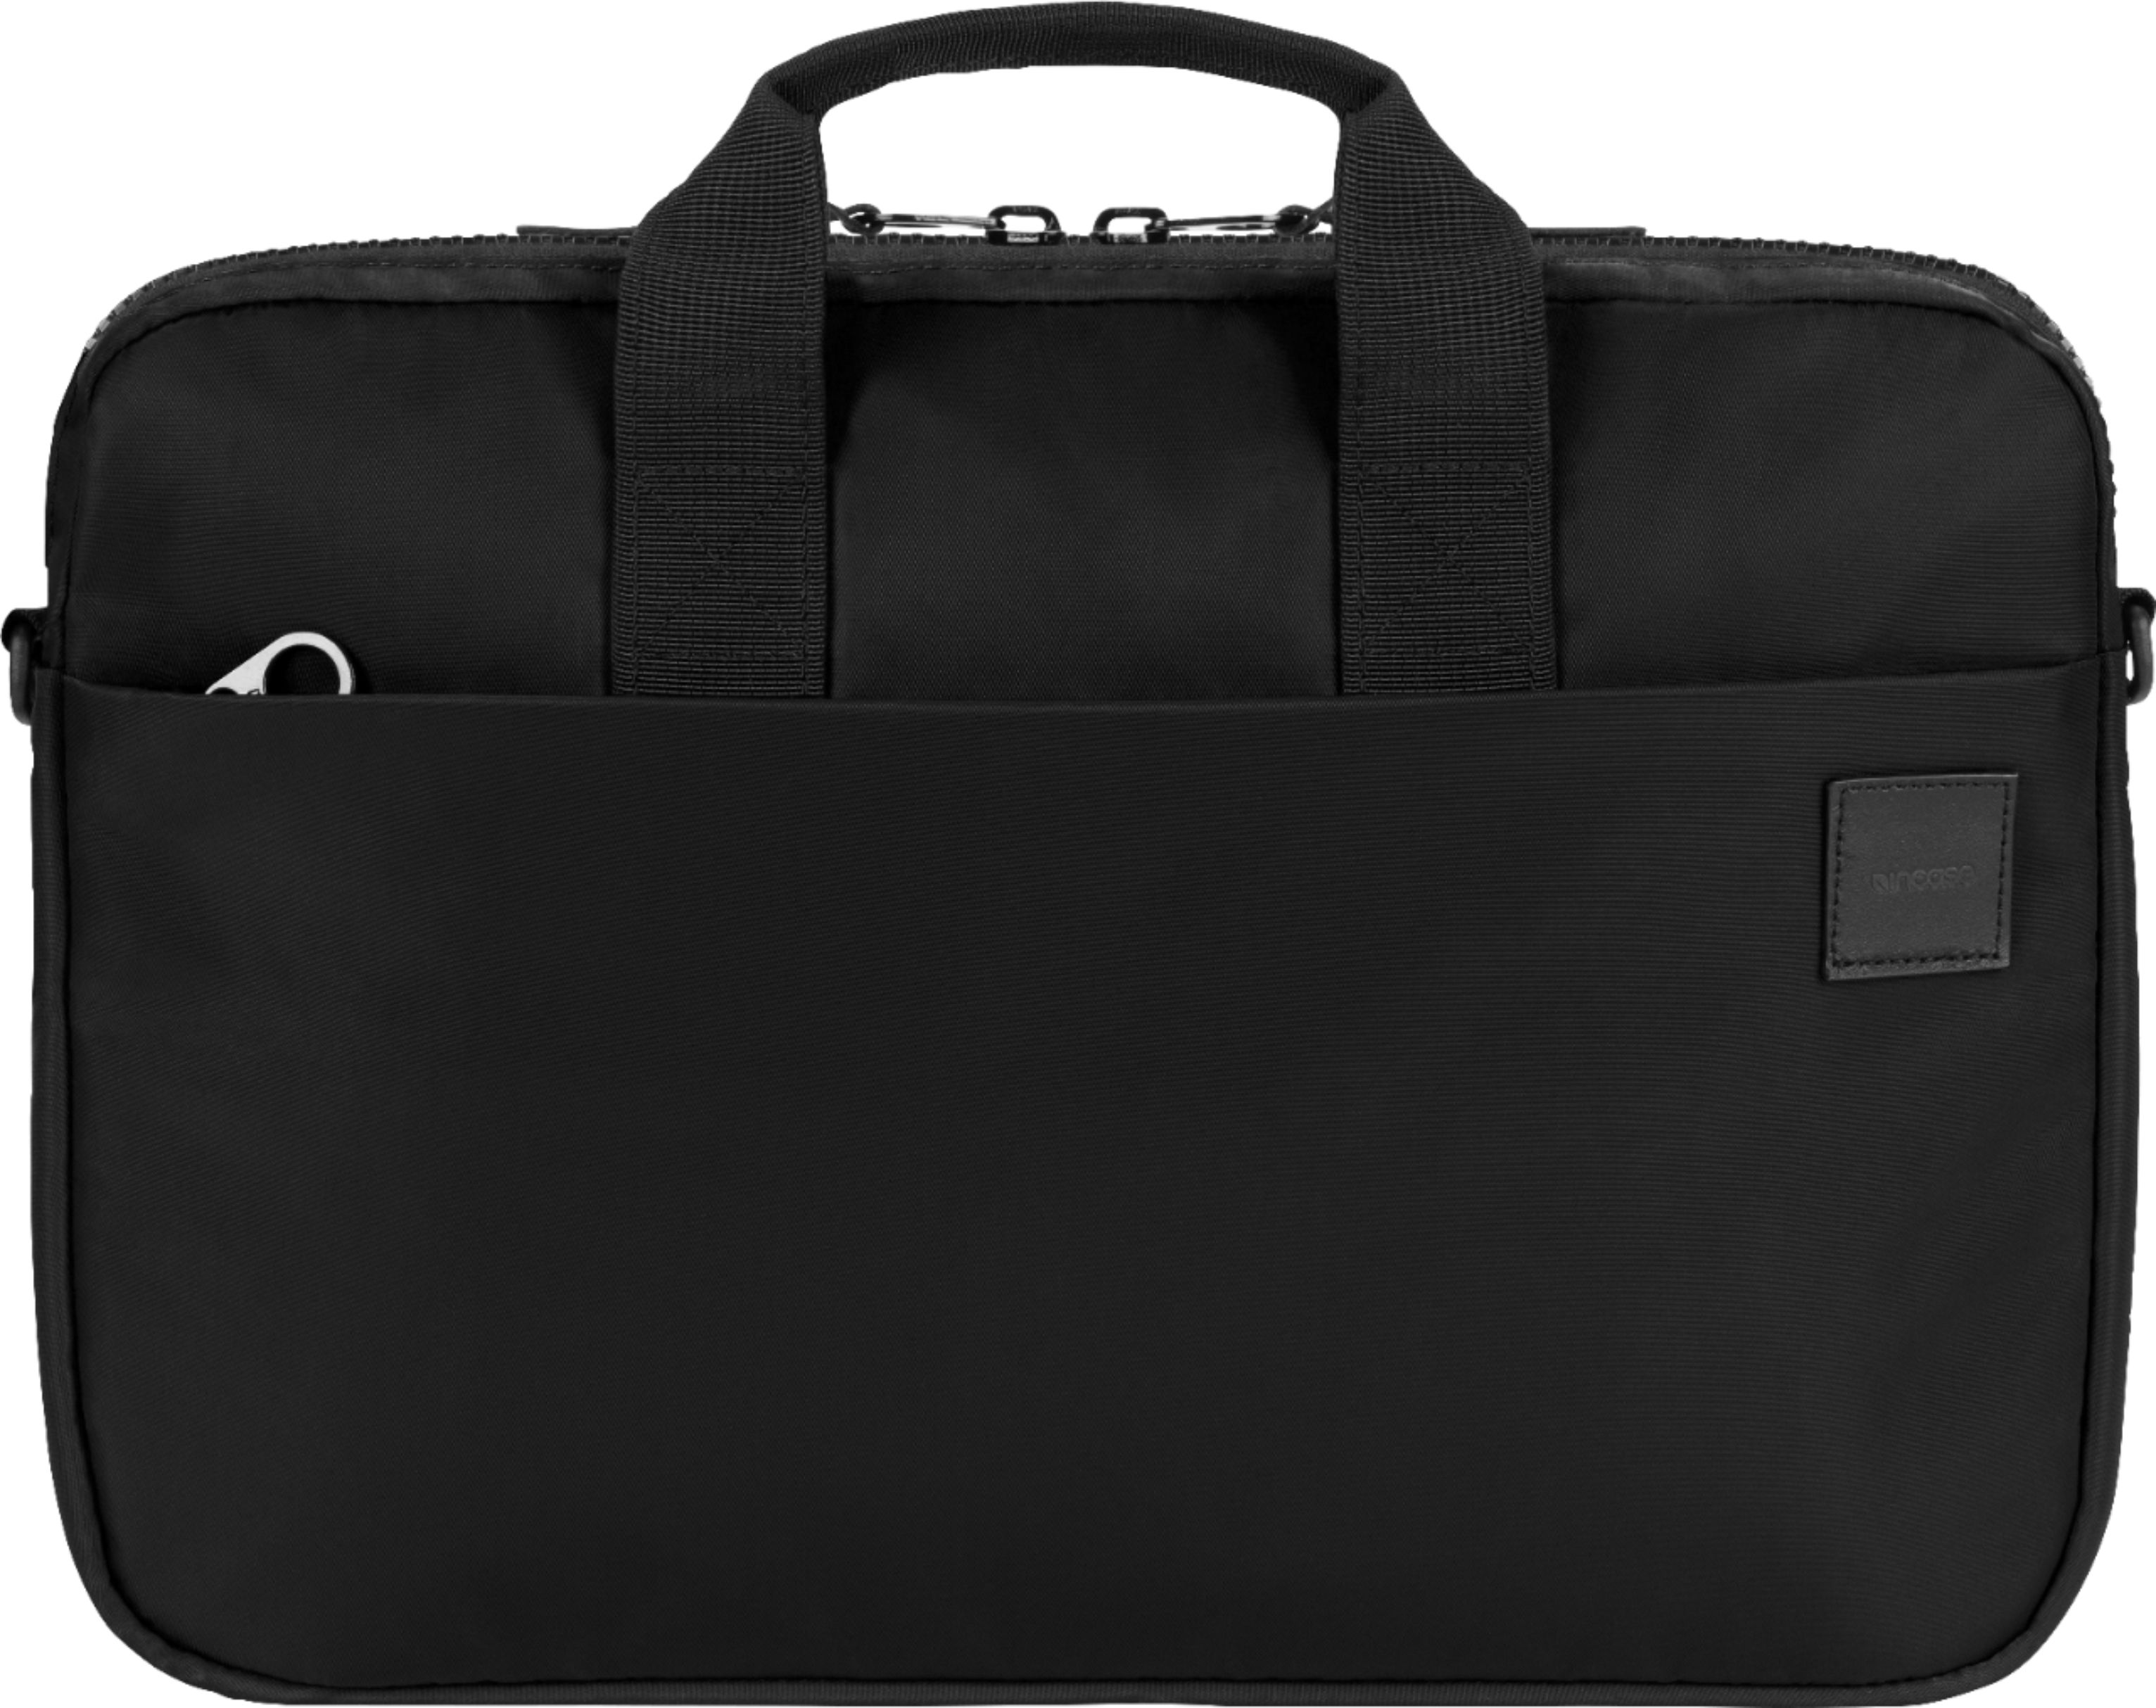 Black Longchamps 13 inch Mac Book Air bag via Applestore website